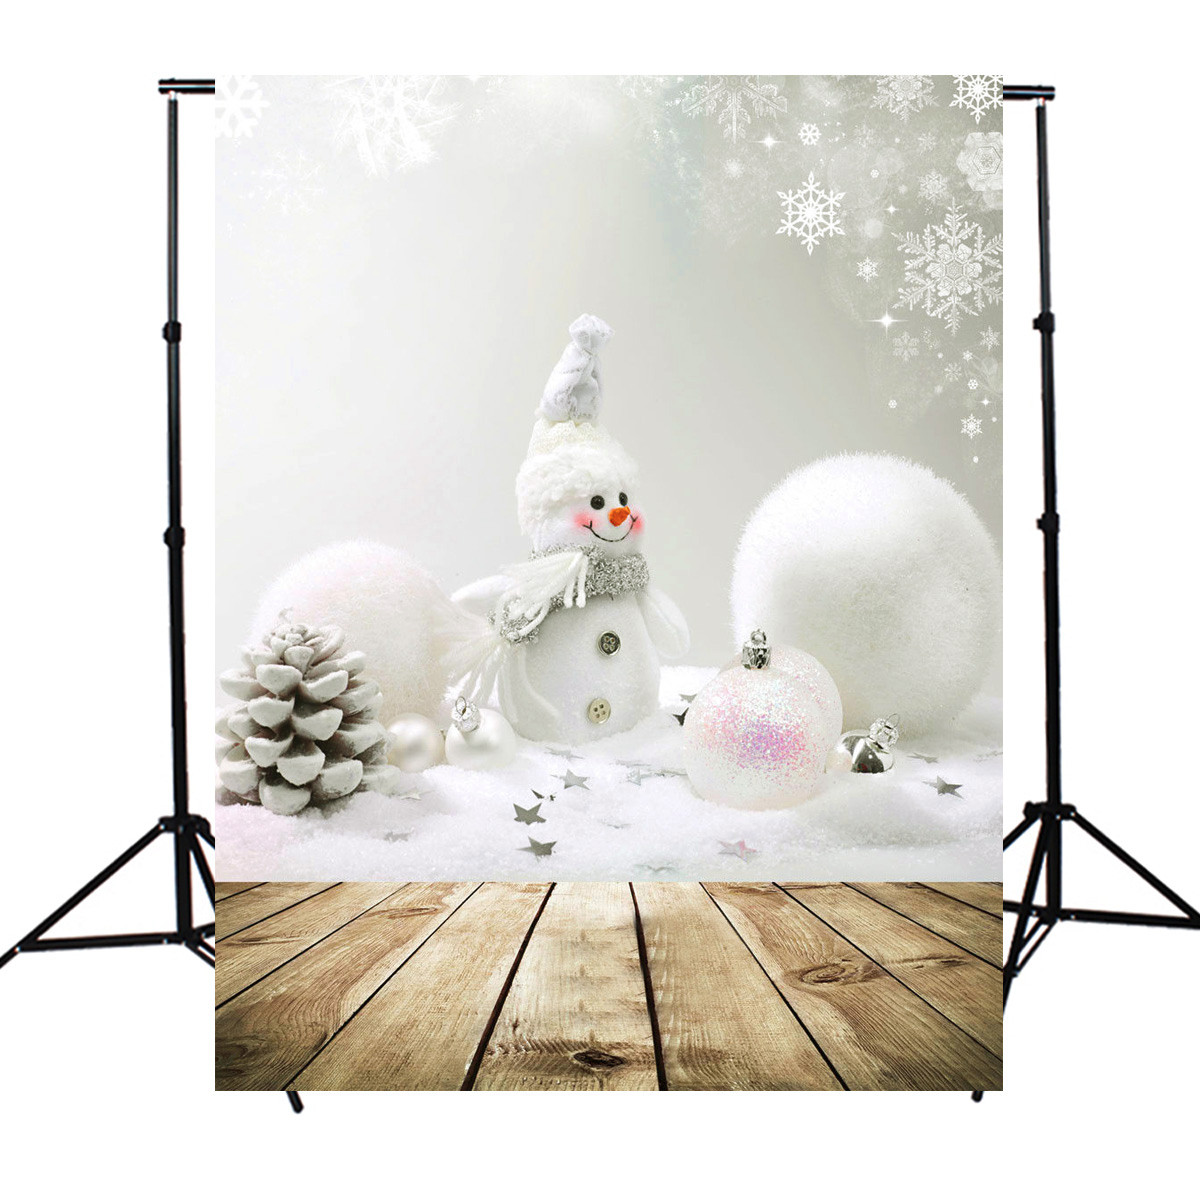 5x7ft Christmas Snowman Wall Board Studio Photo Photography Background Backdrop